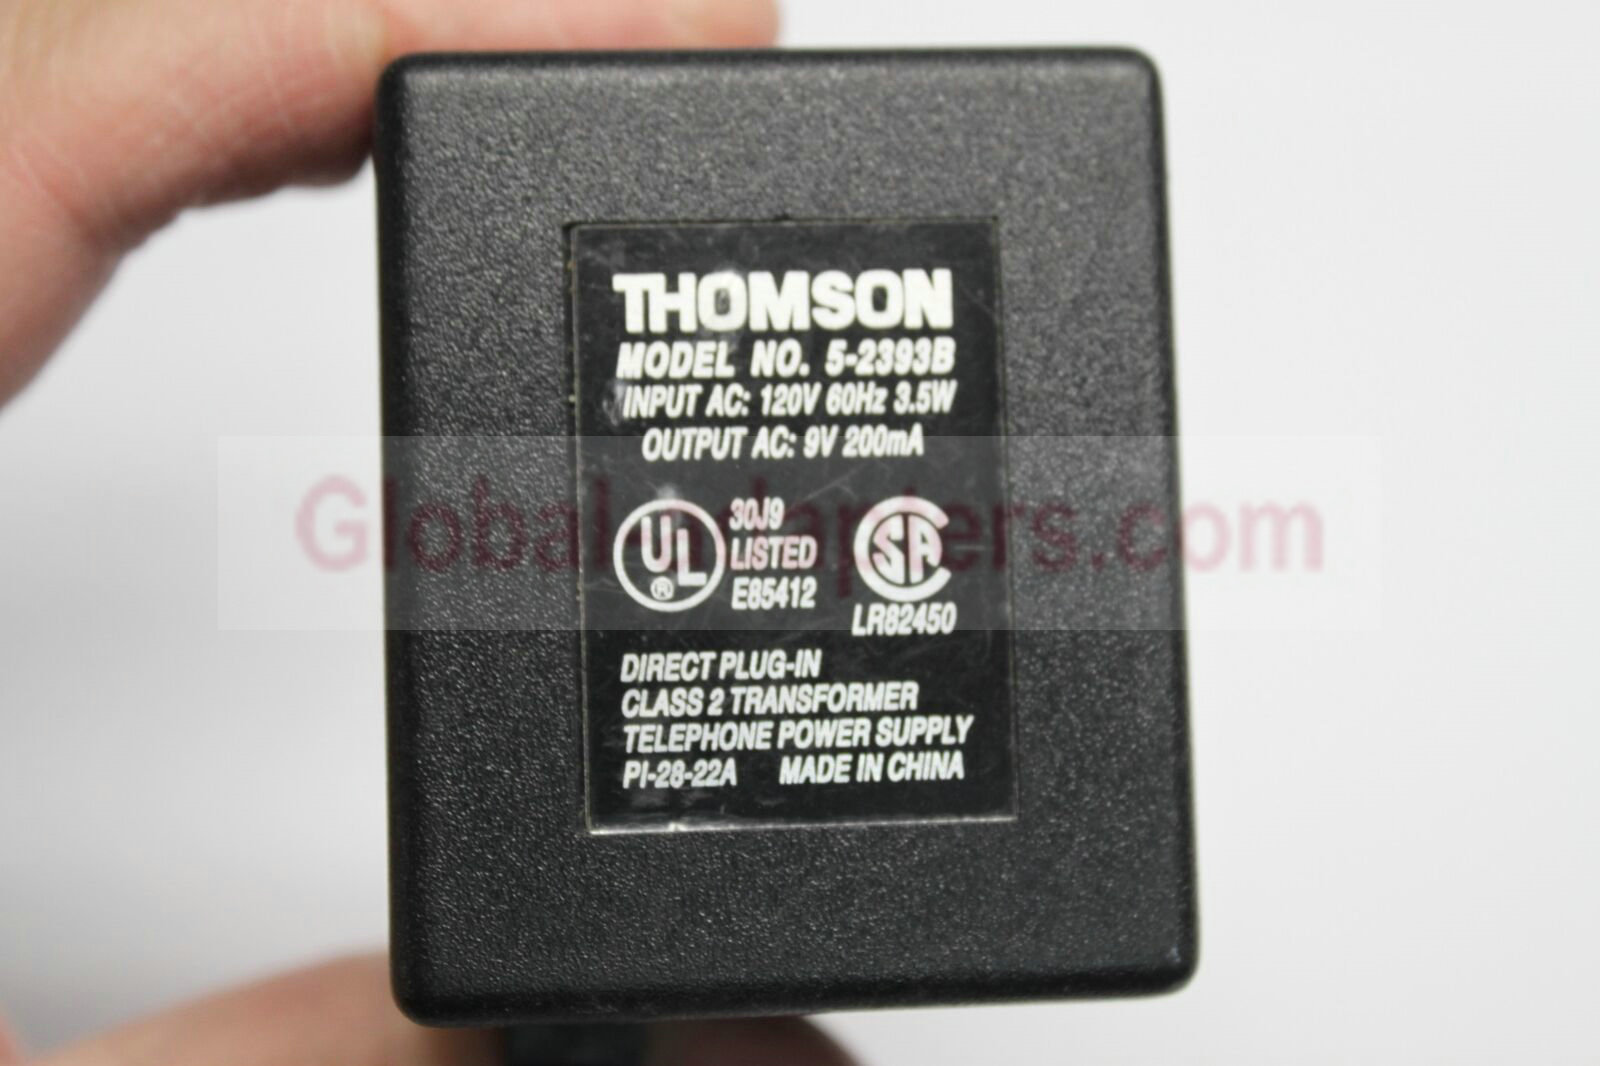 New 9V 200mA Thomson 5-2393B Class 2 Transformer Power Supply Ac Adapter